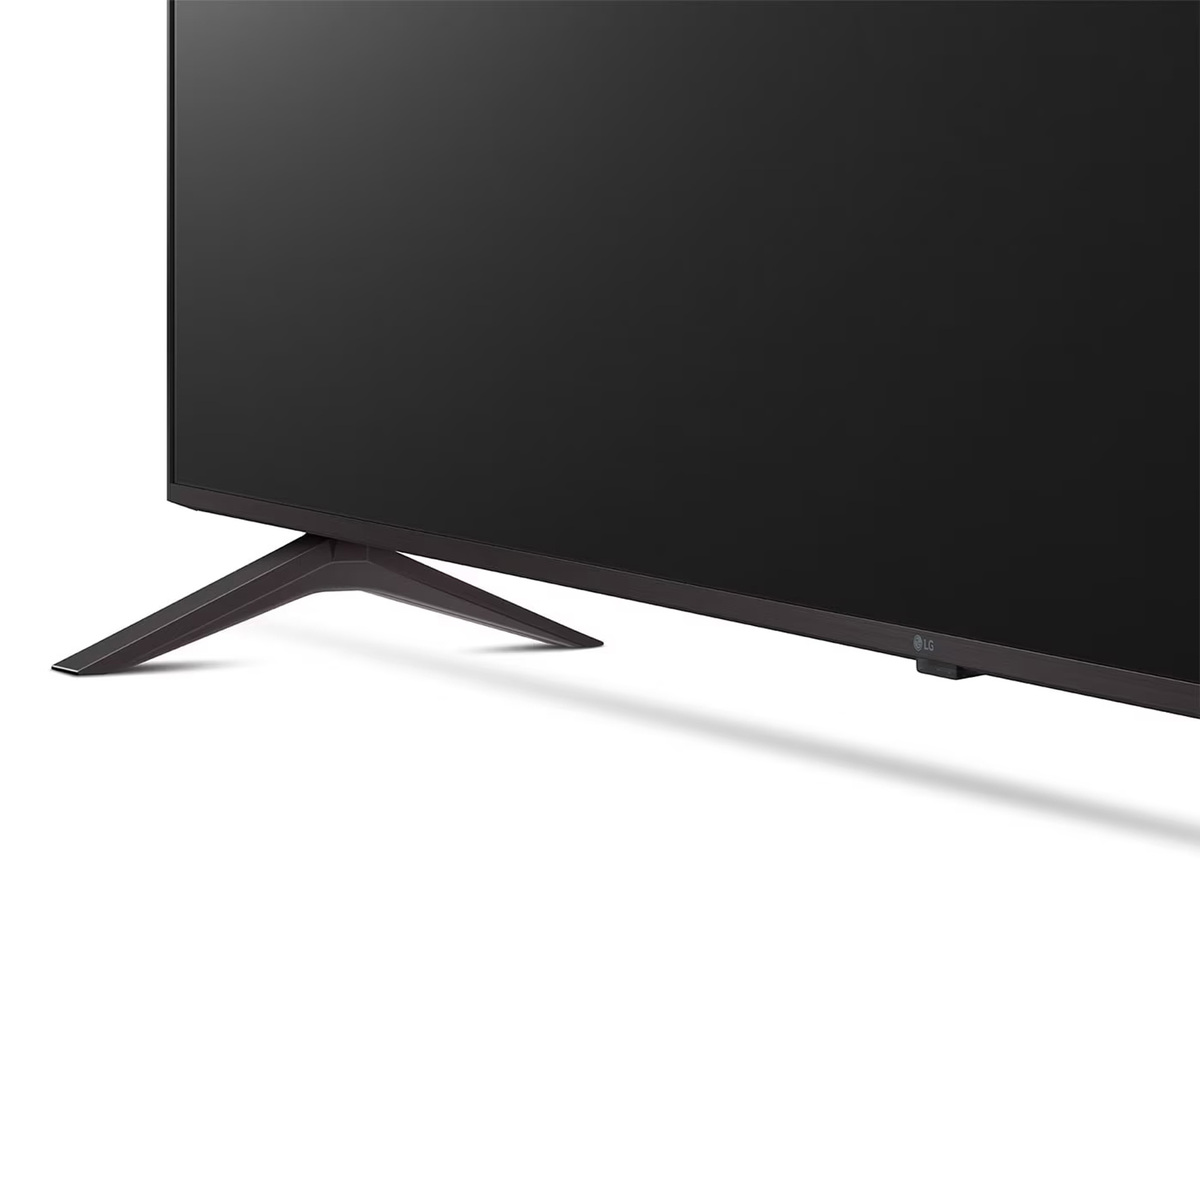 LG 55 Inches 4K UHD Smart TV, 55UR78006LLAMAE, Magic remote, HDR, WebOS